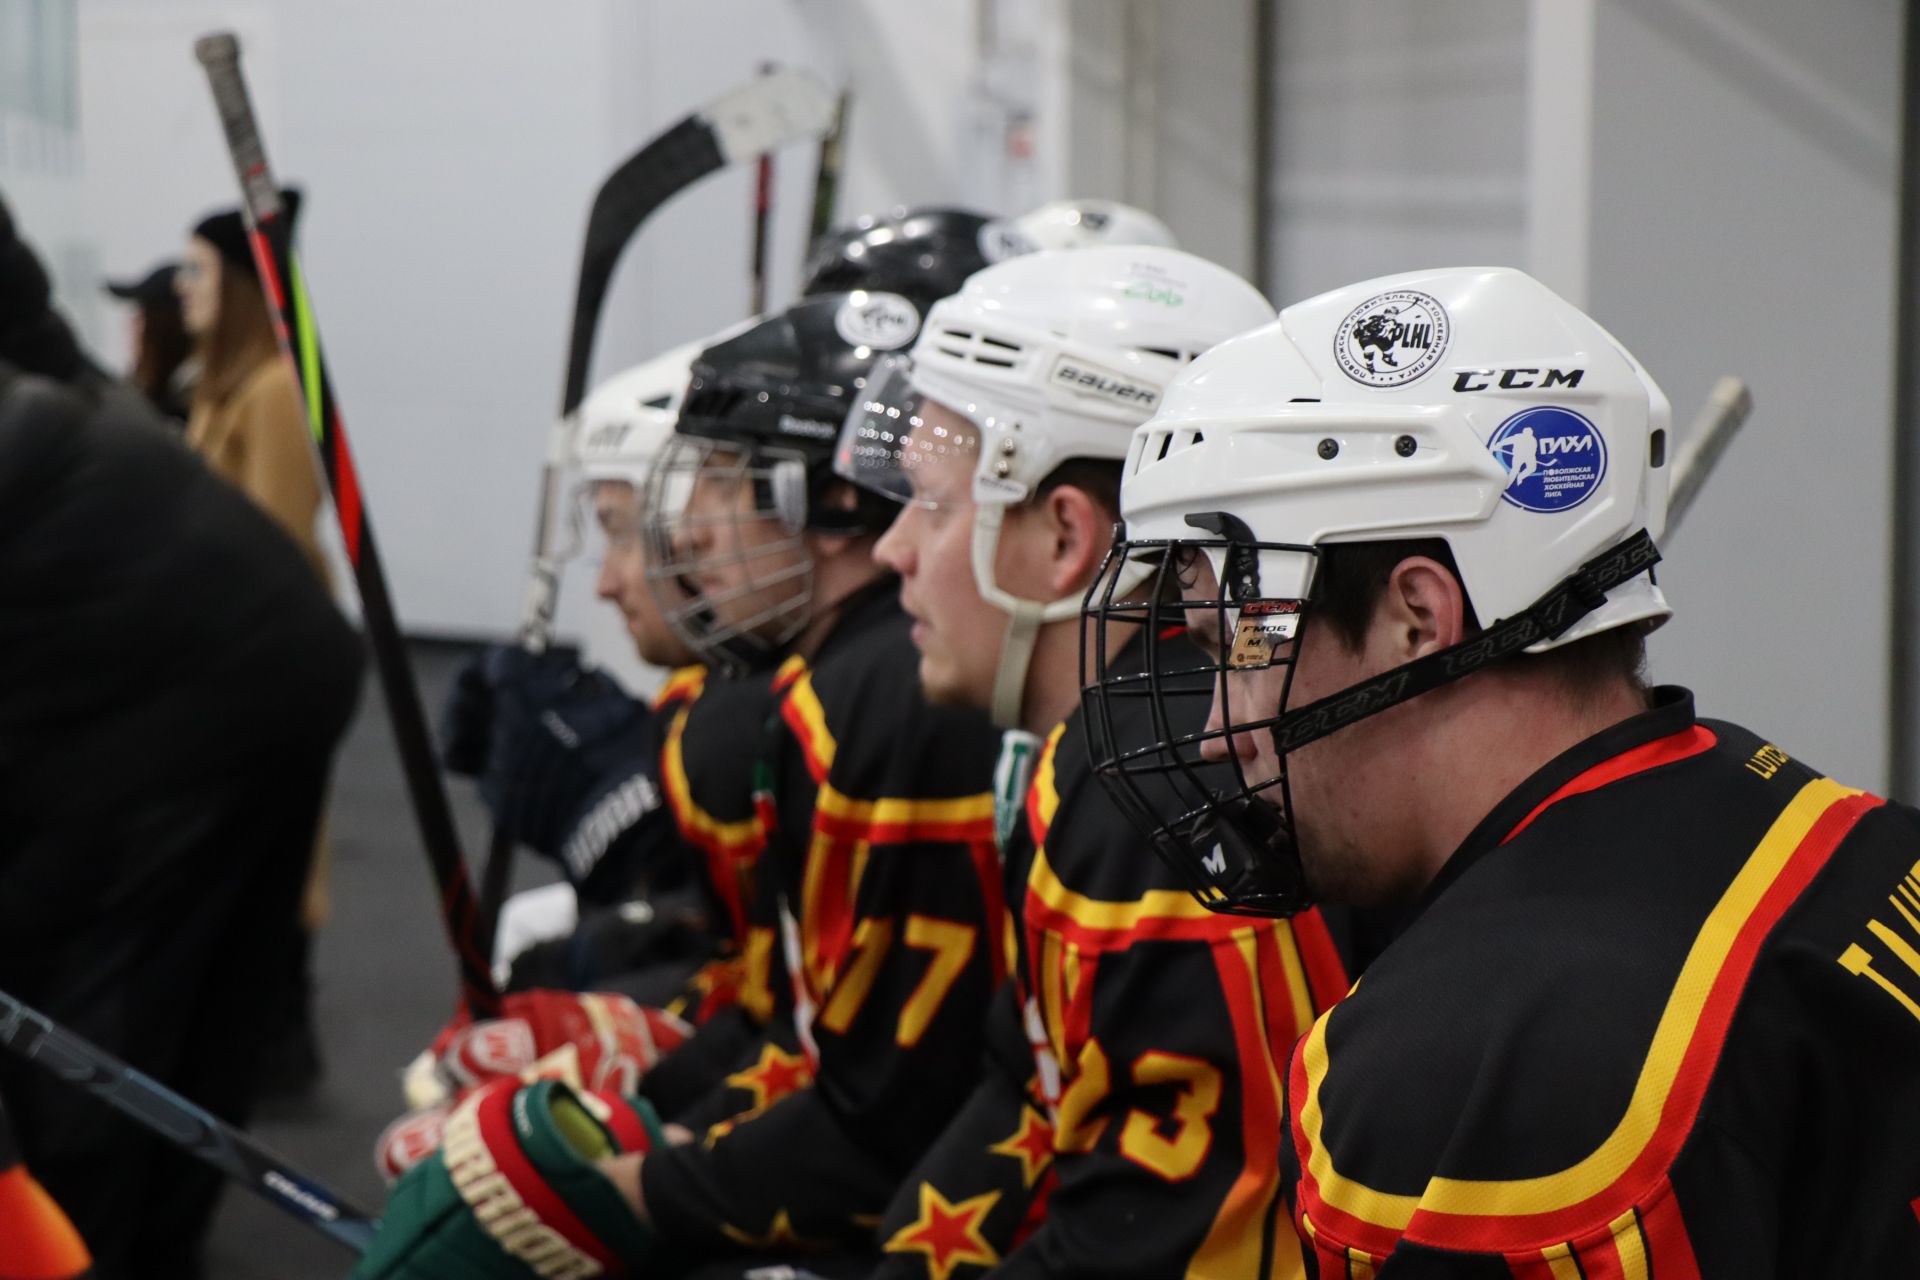 В Лаишеве проходит турнир по хоккею среди мужских команд на кубок Мr. Ricco 2023